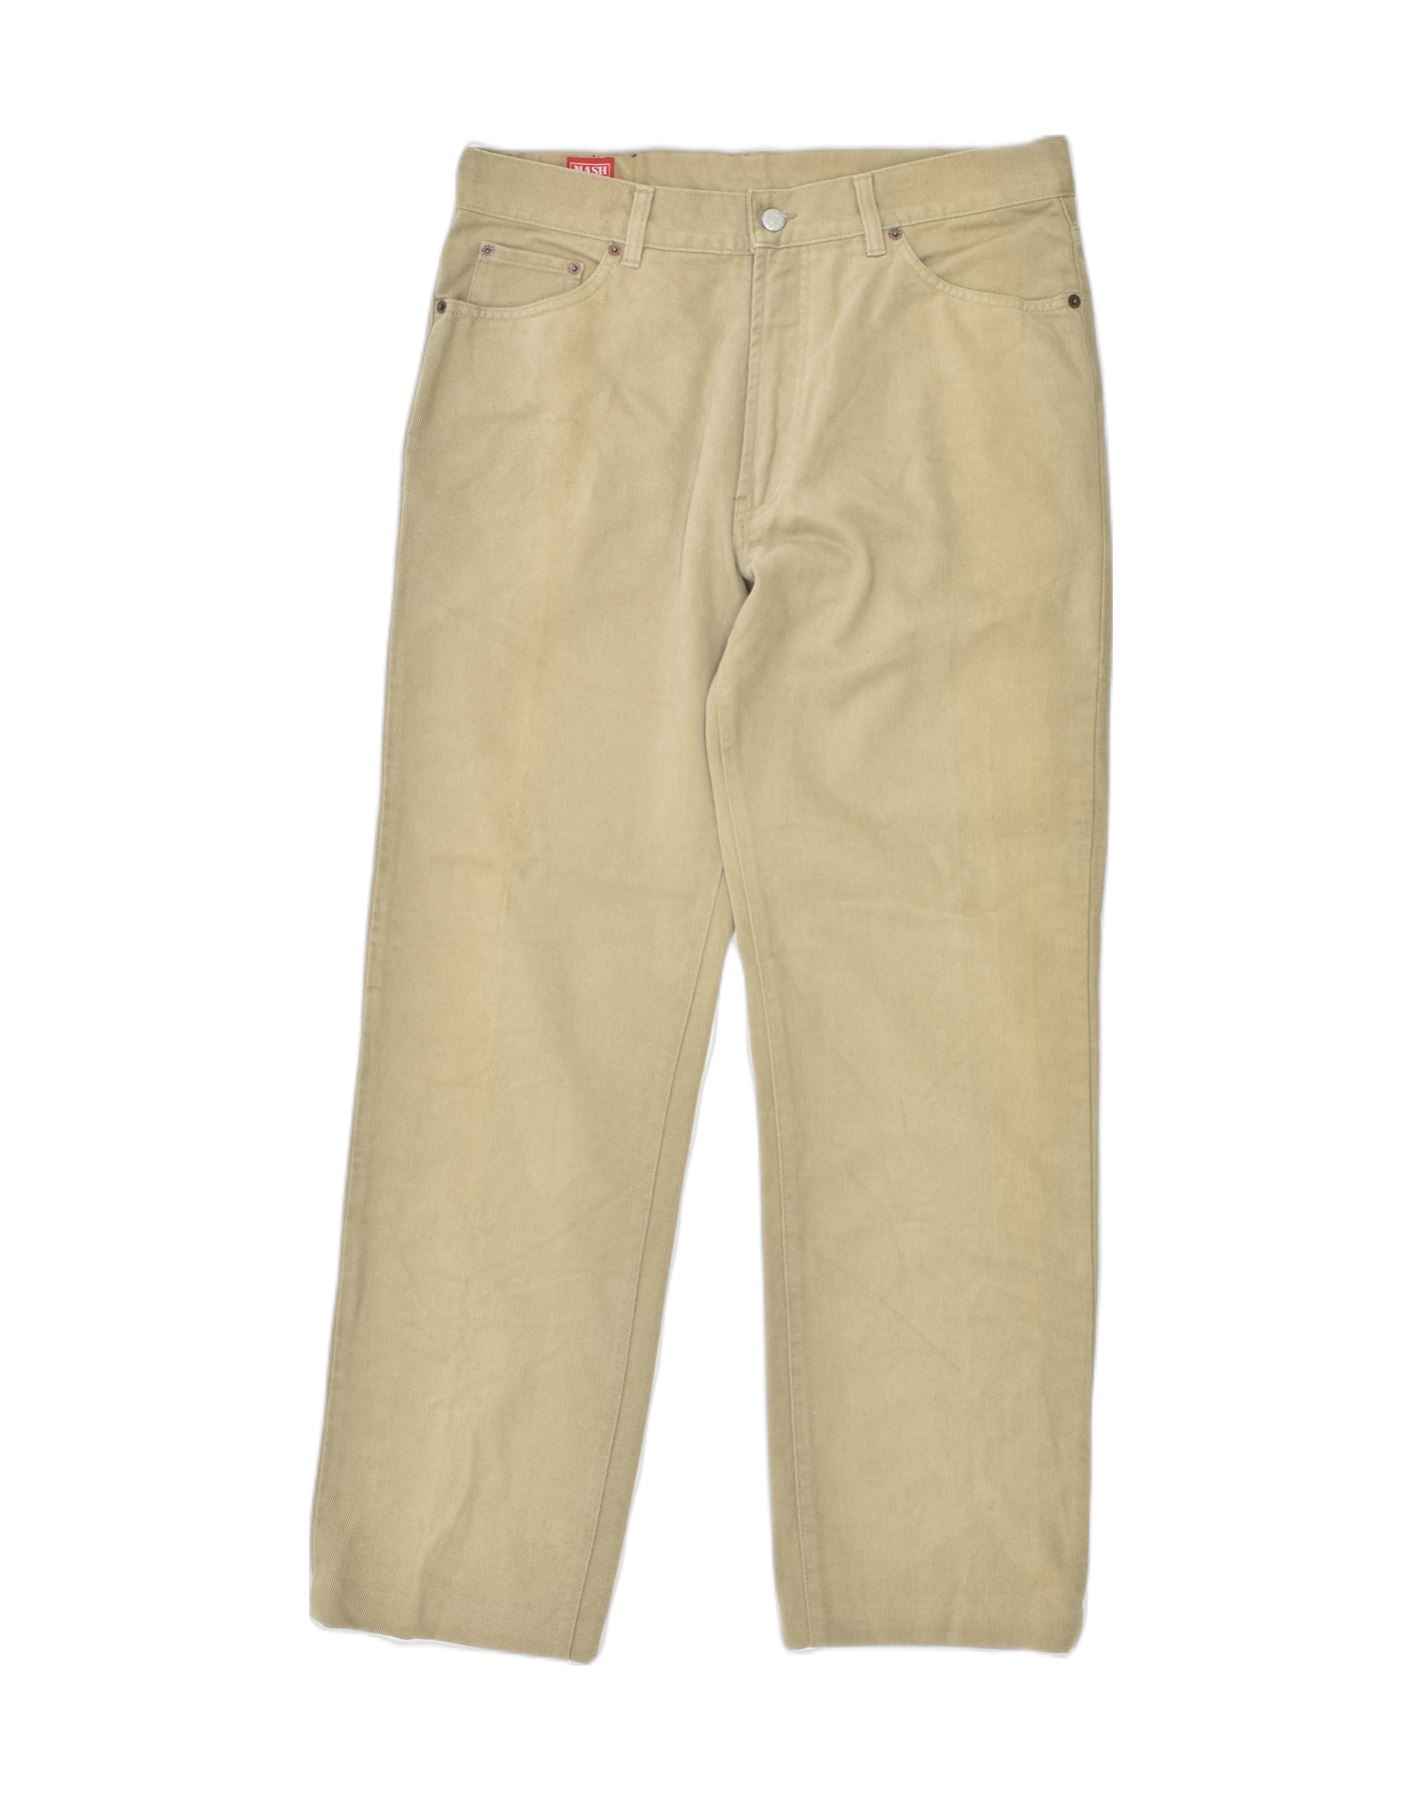 khaki Hollister jeans (waist size: 31), Men's Fashion, Bottoms